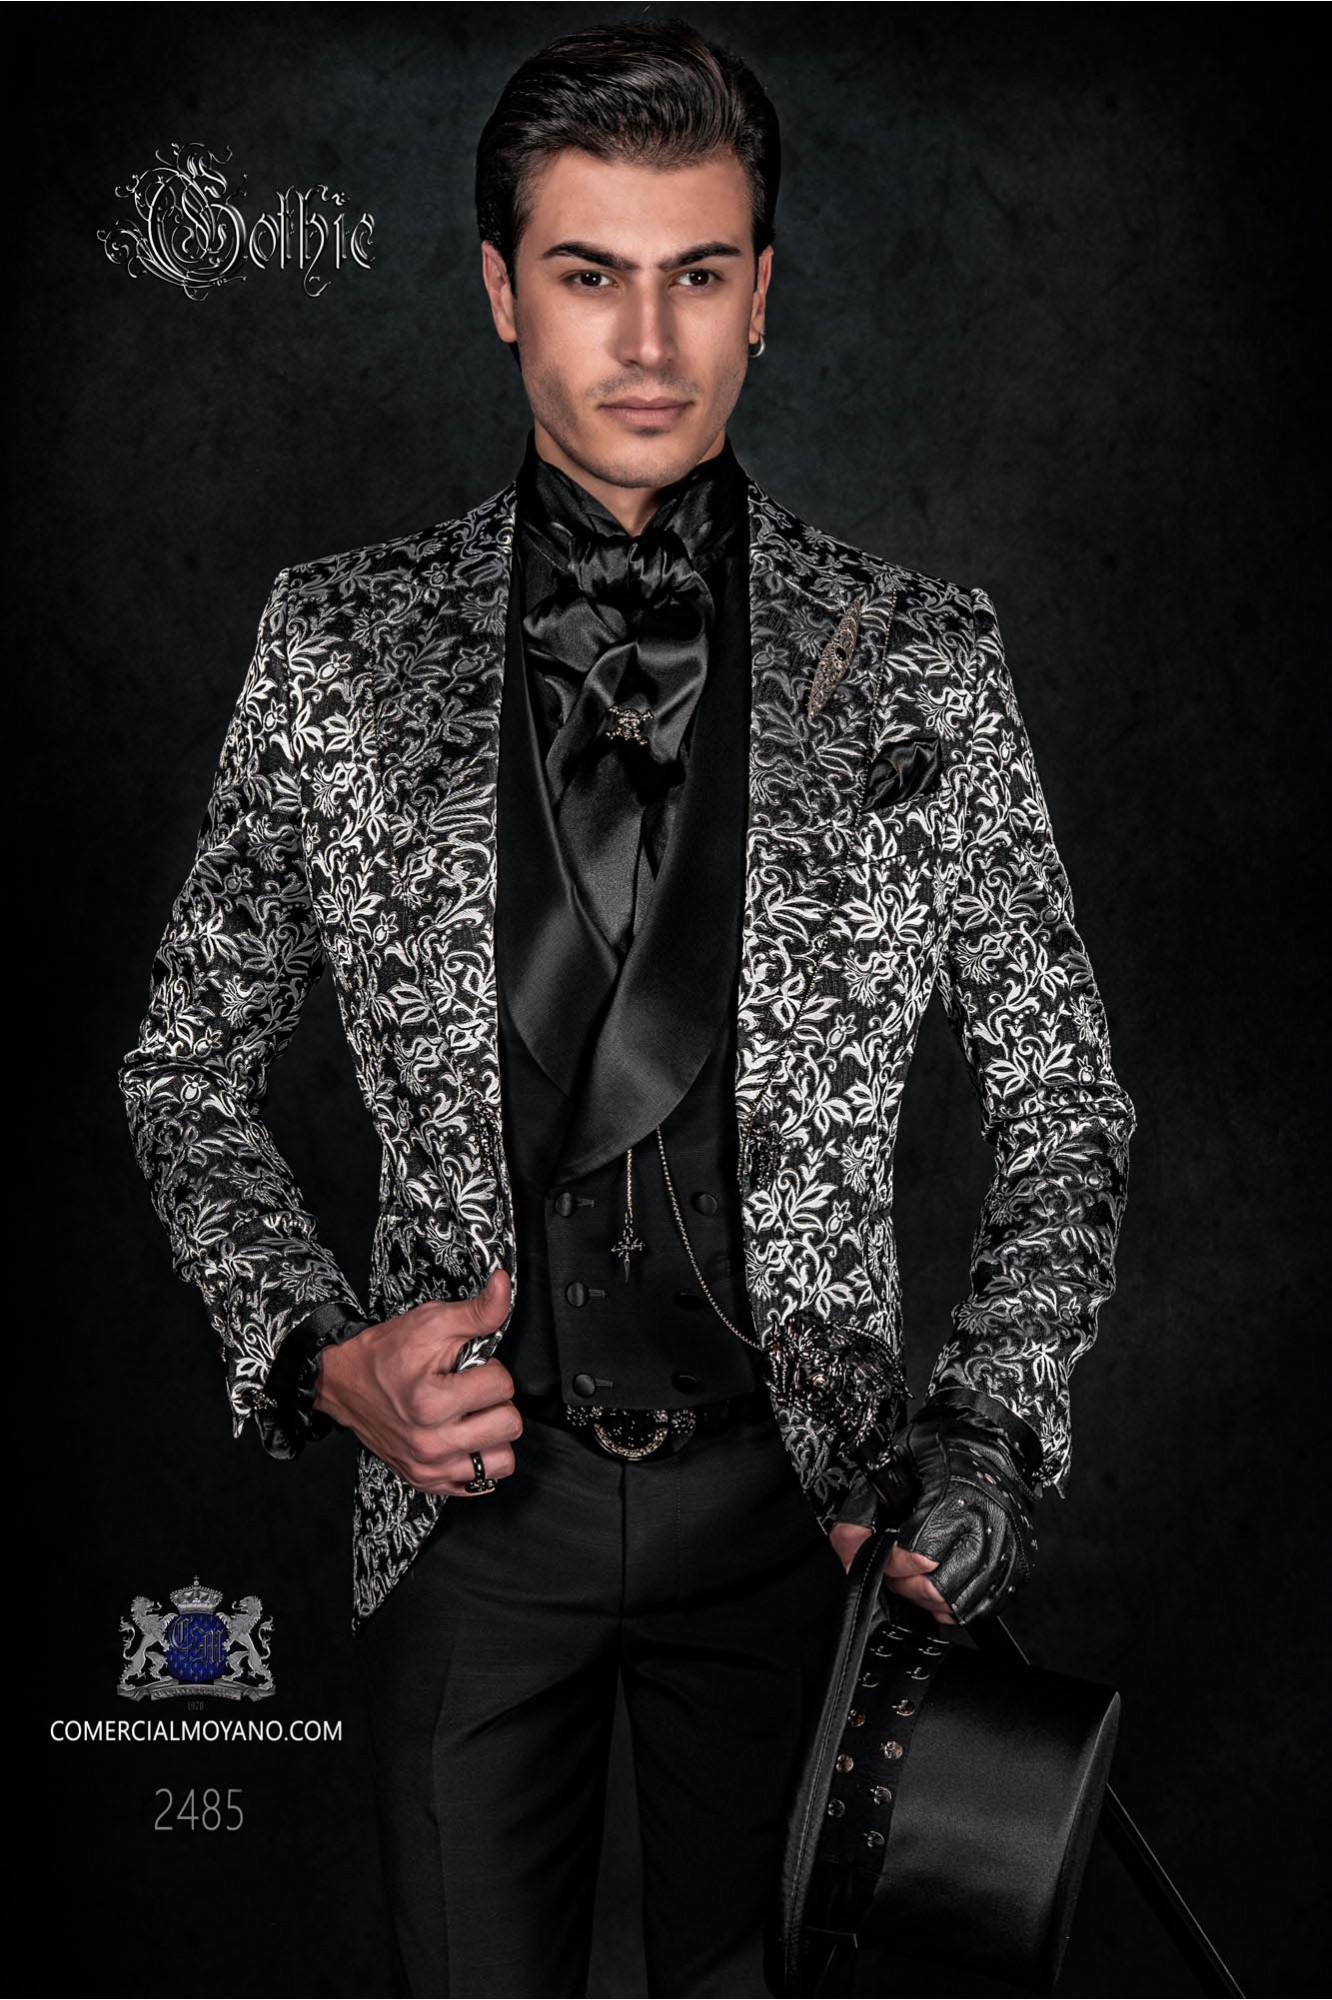 Gothic fashion groom frock coat black and silver brocade model 2485 Mario Moyano